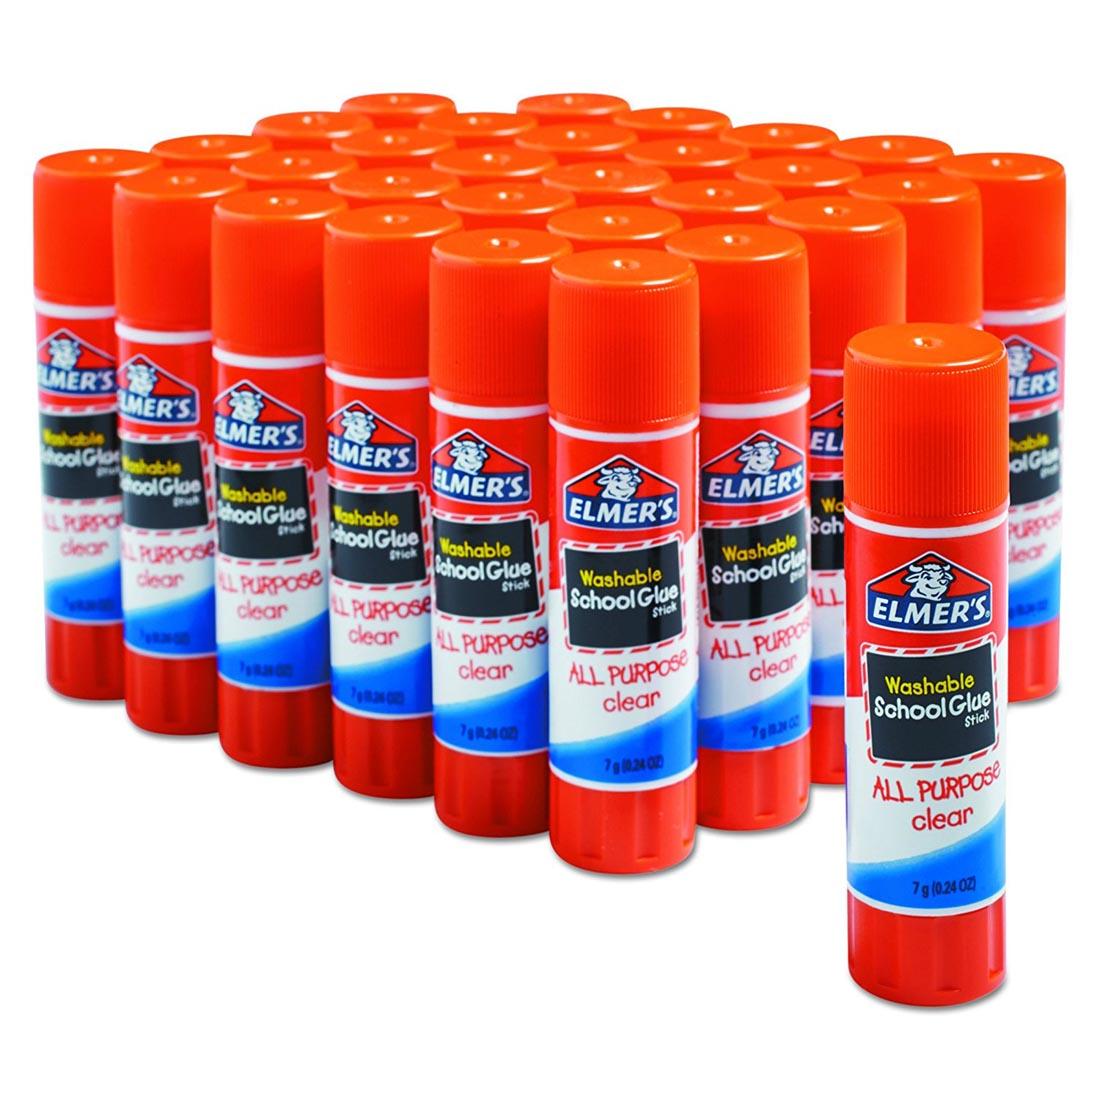 Elmer's Clear Washable School Glue Sticks 30-Count